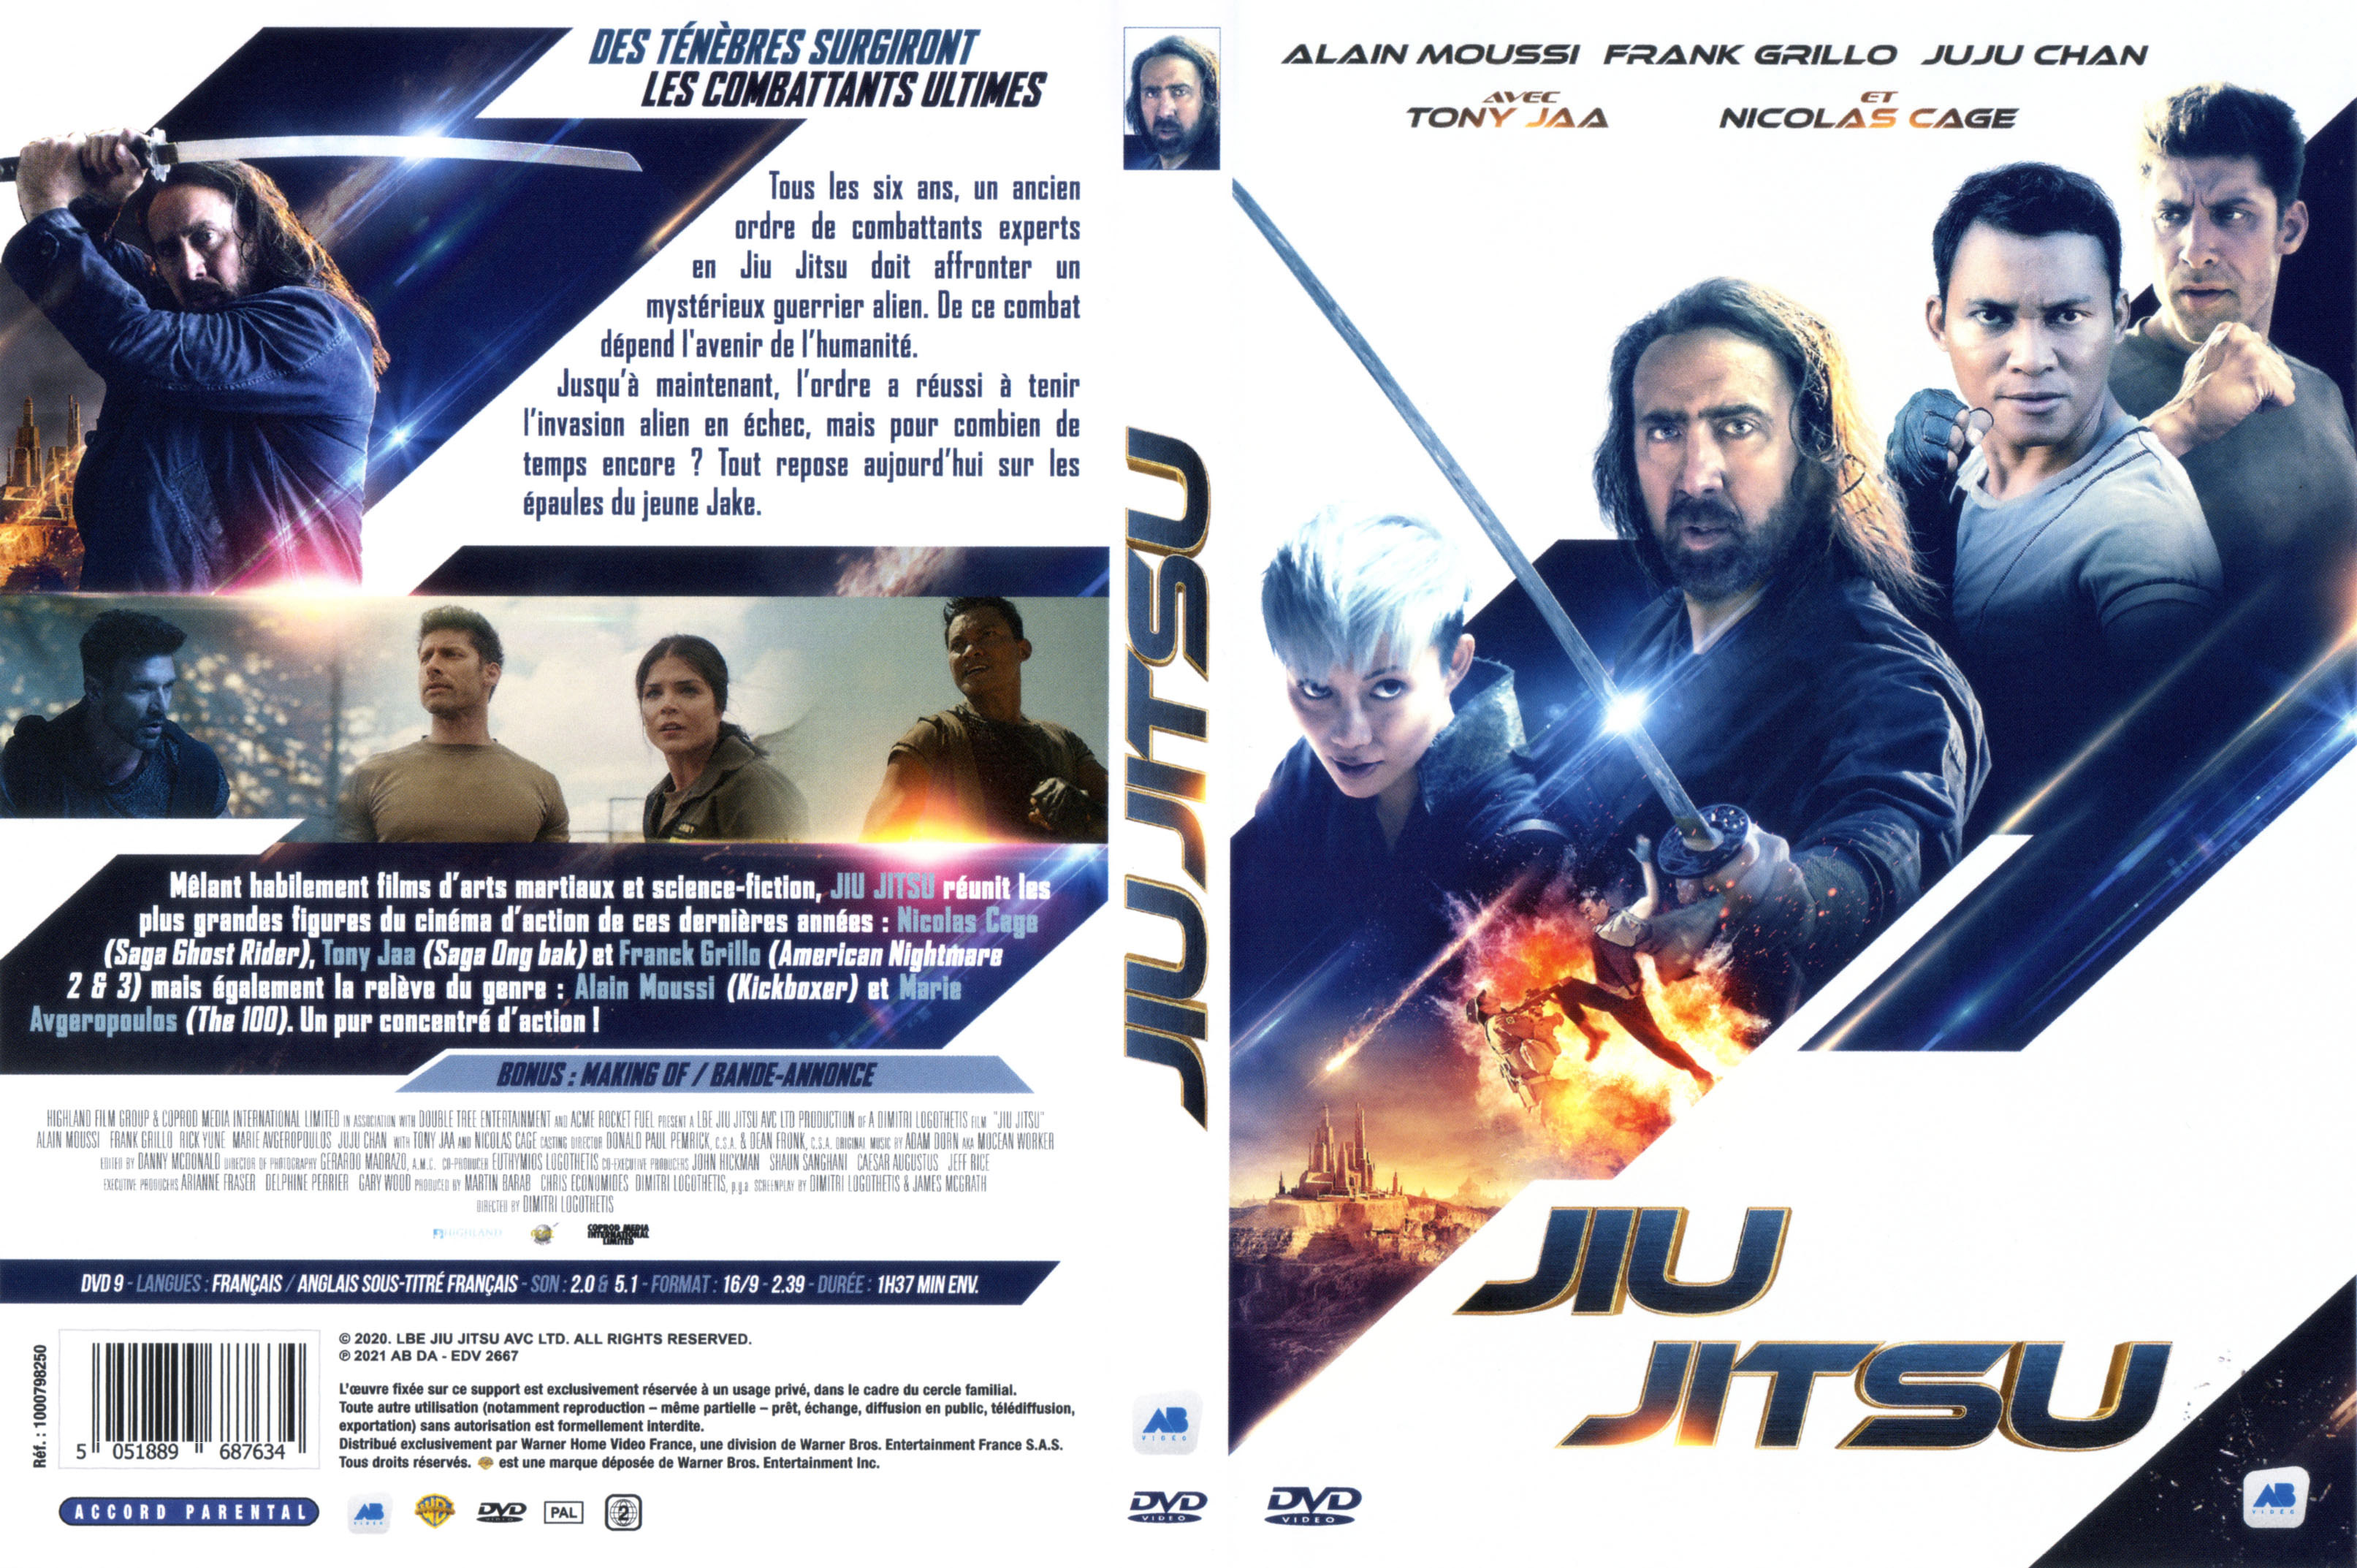 Jaquette DVD Jiu jitsu